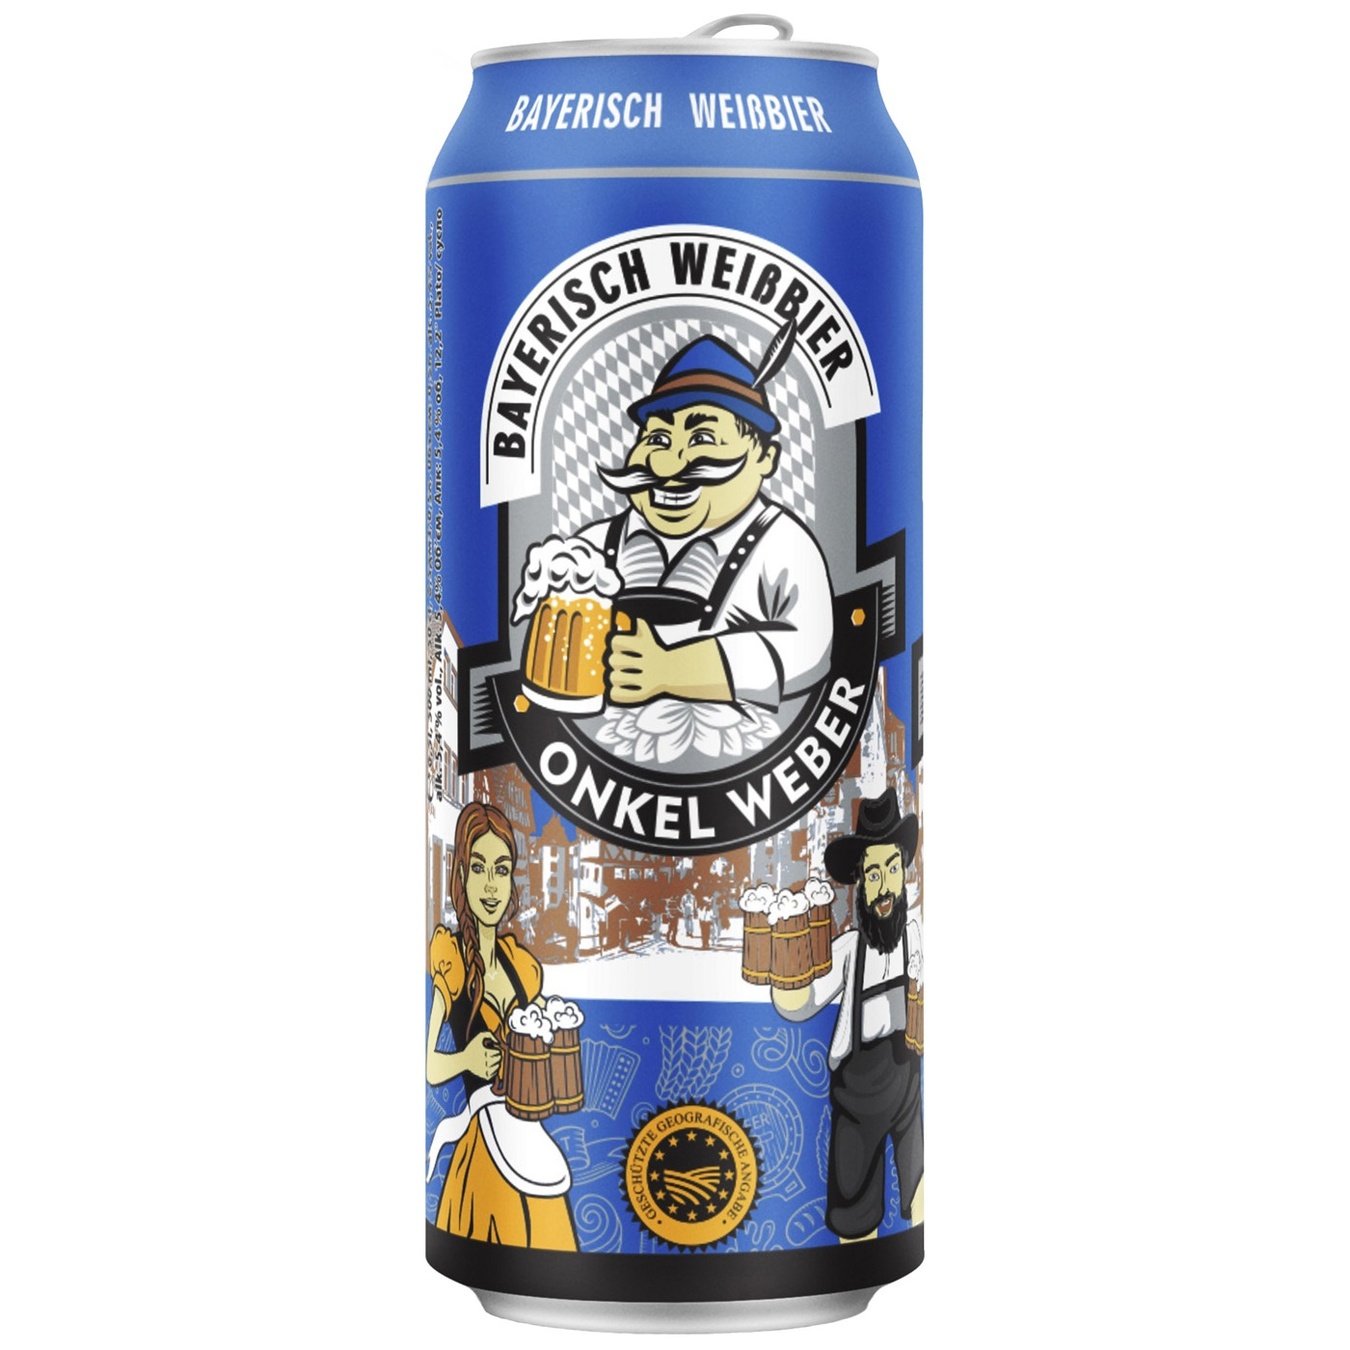 Пиво светлое Onkel Weber Bayerisch Weissbier 5,4% 0,5л железная банка